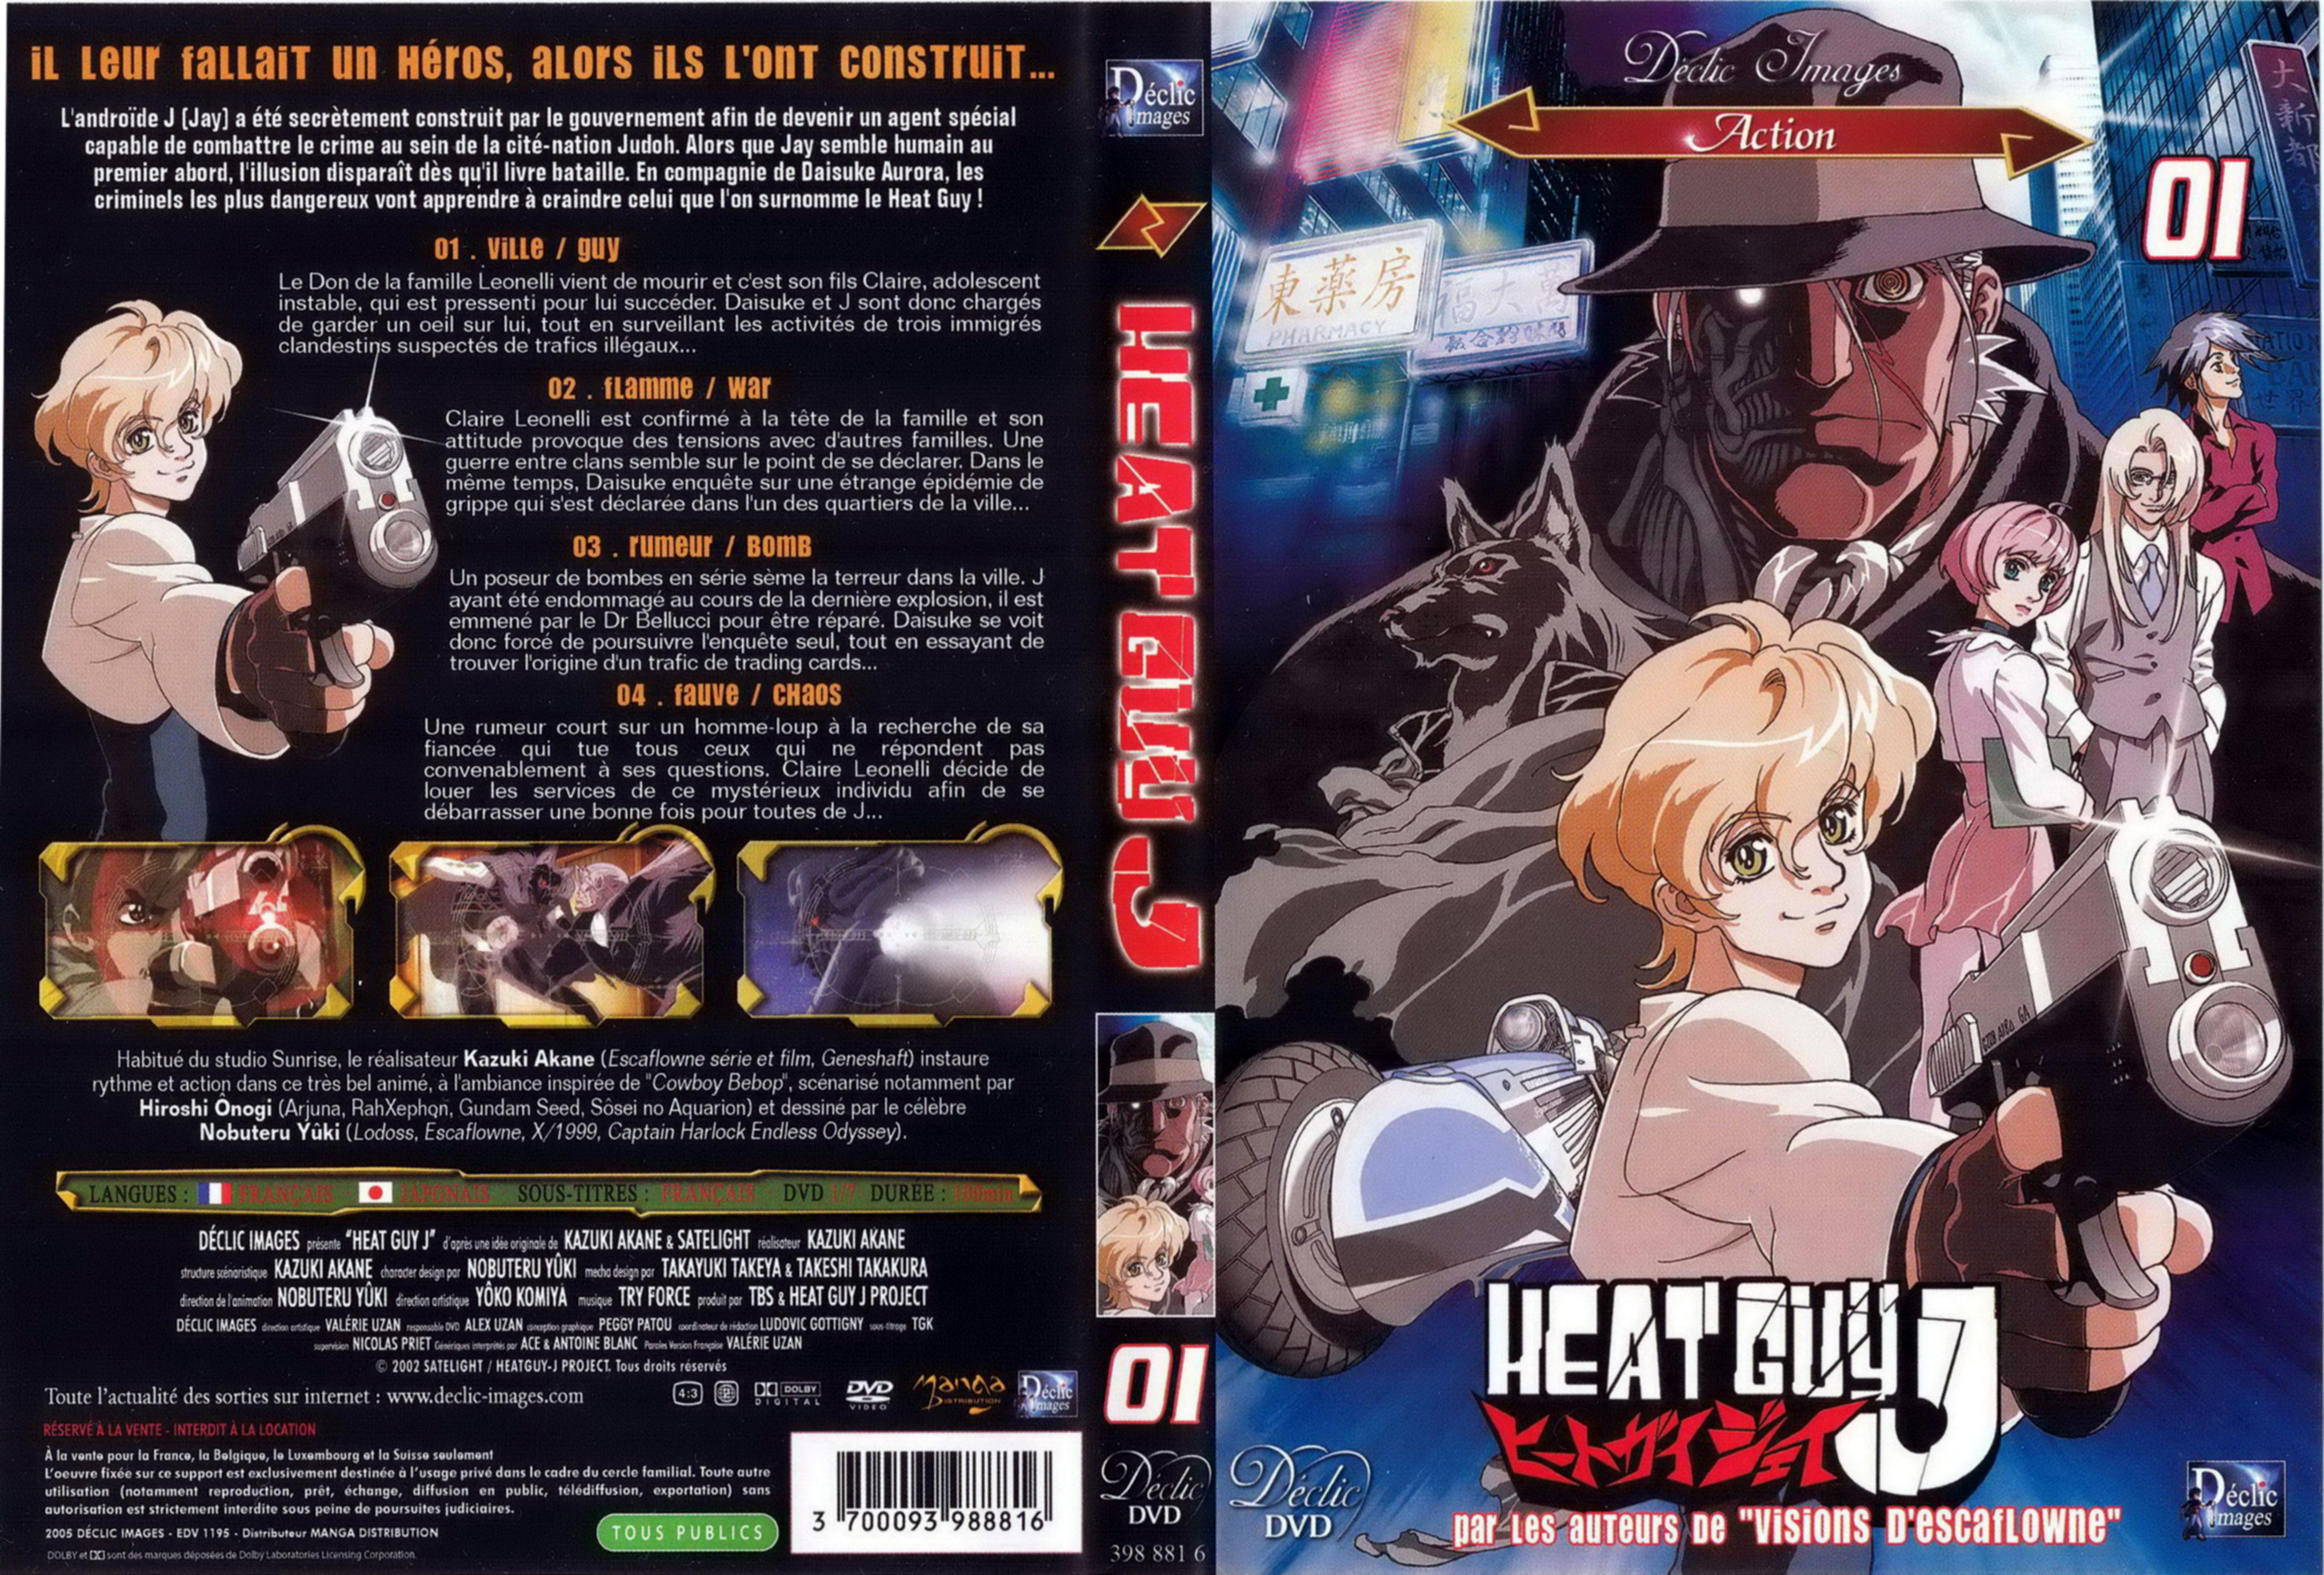 Jaquette DVD Heat guy J vol 01